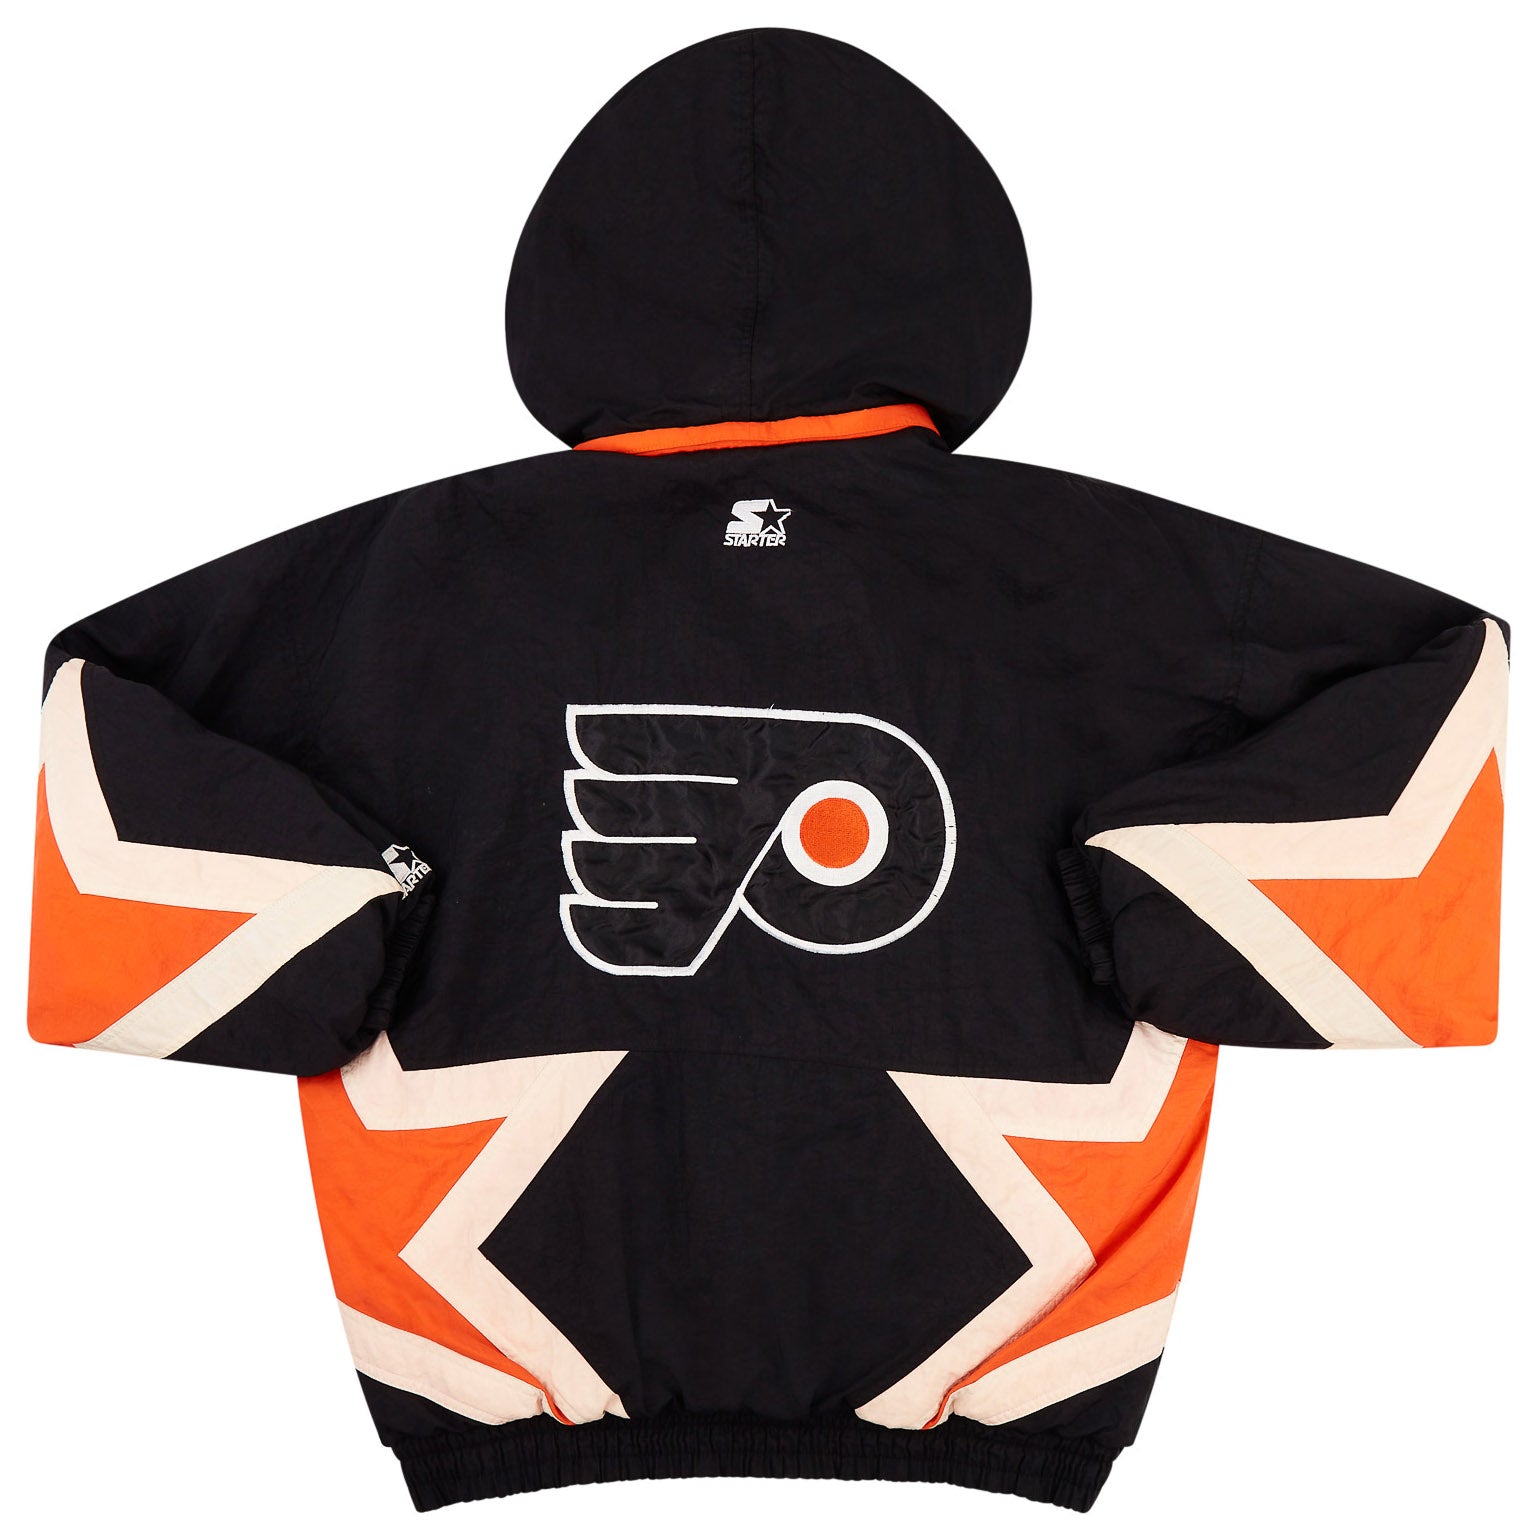 Vintage 1990s Philadelphia Flyers Starter Hockey Jersey